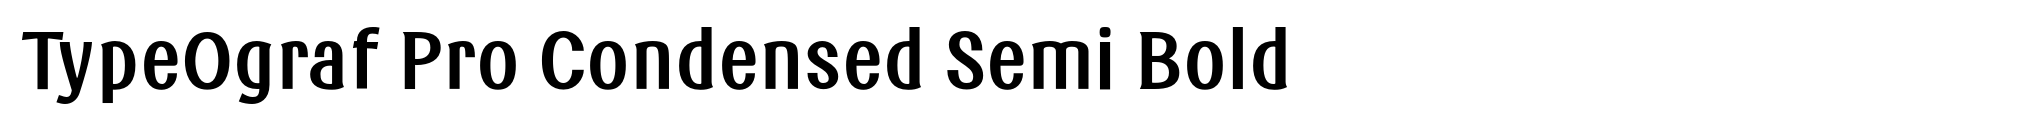 TypeOgraf Pro Condensed Semi Bold image